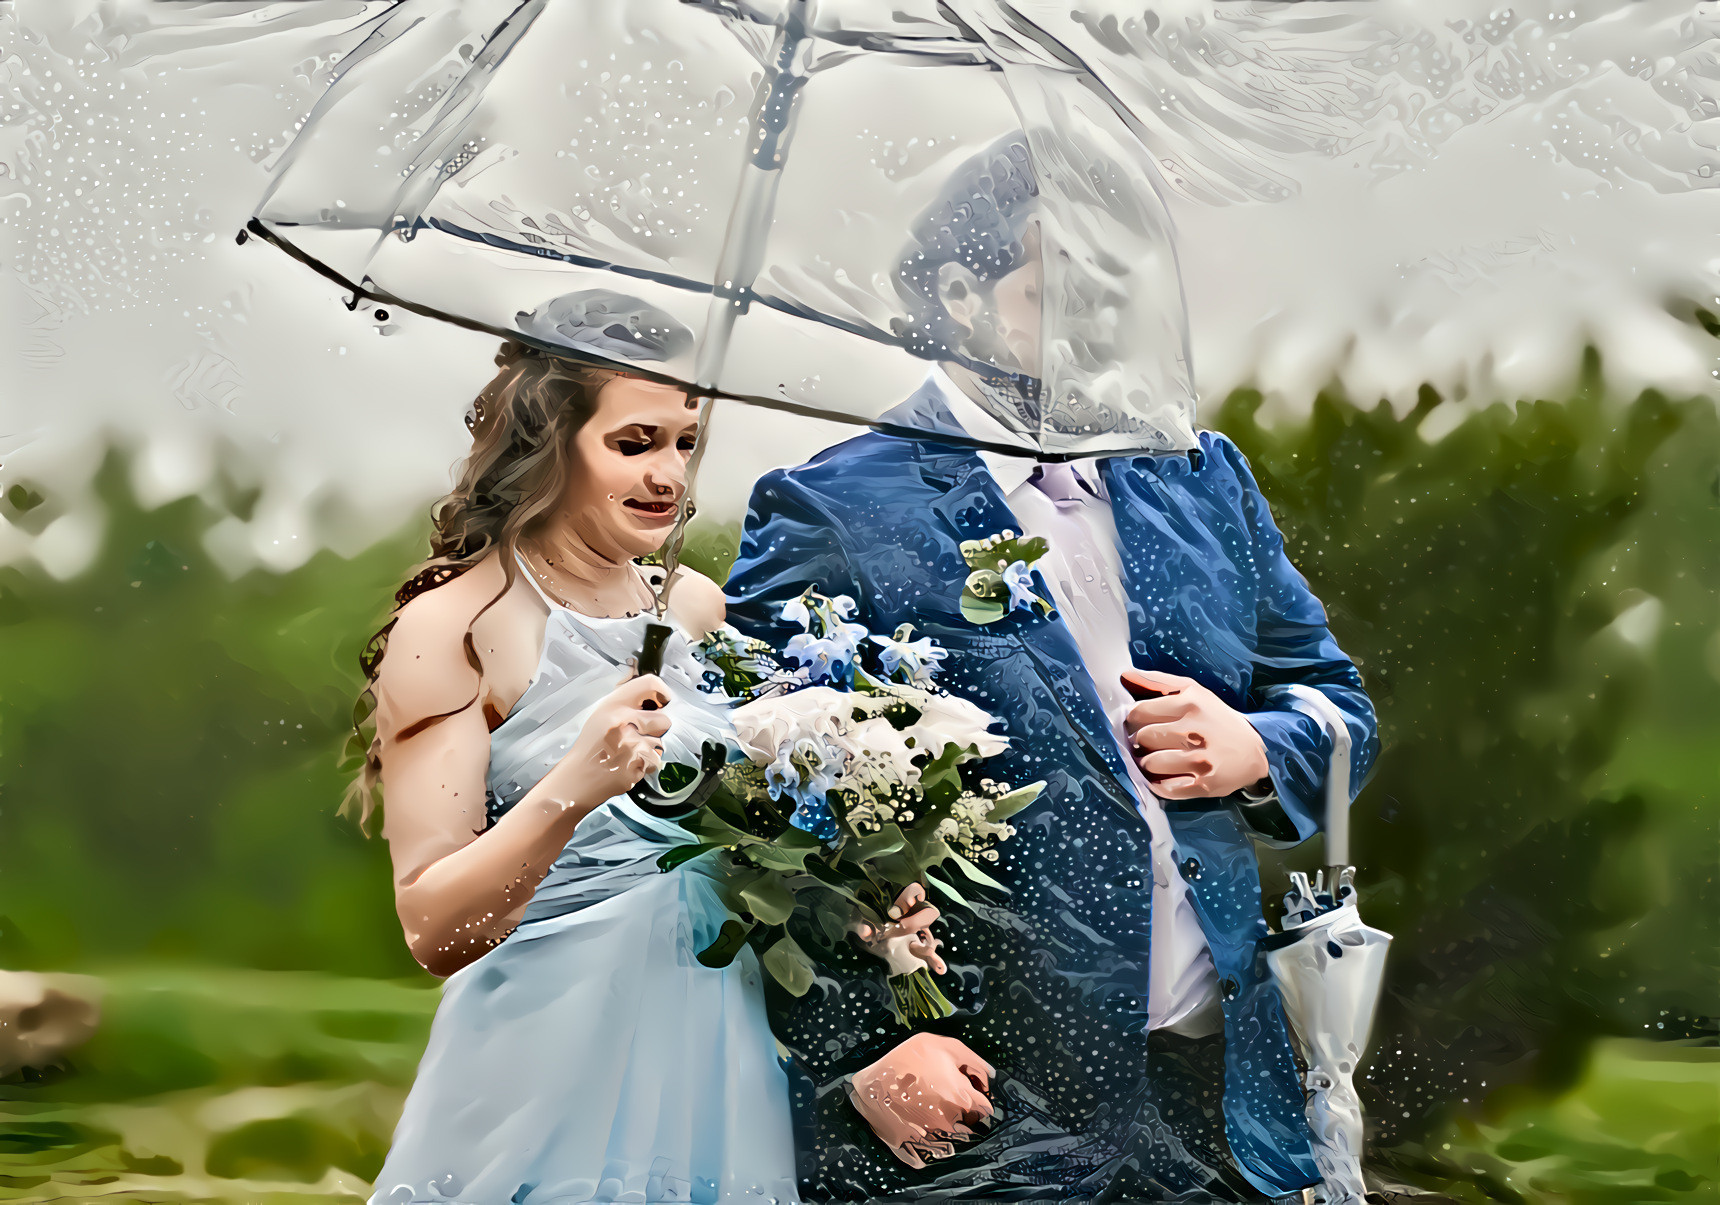 Umbrella ukiyo bridesmaid